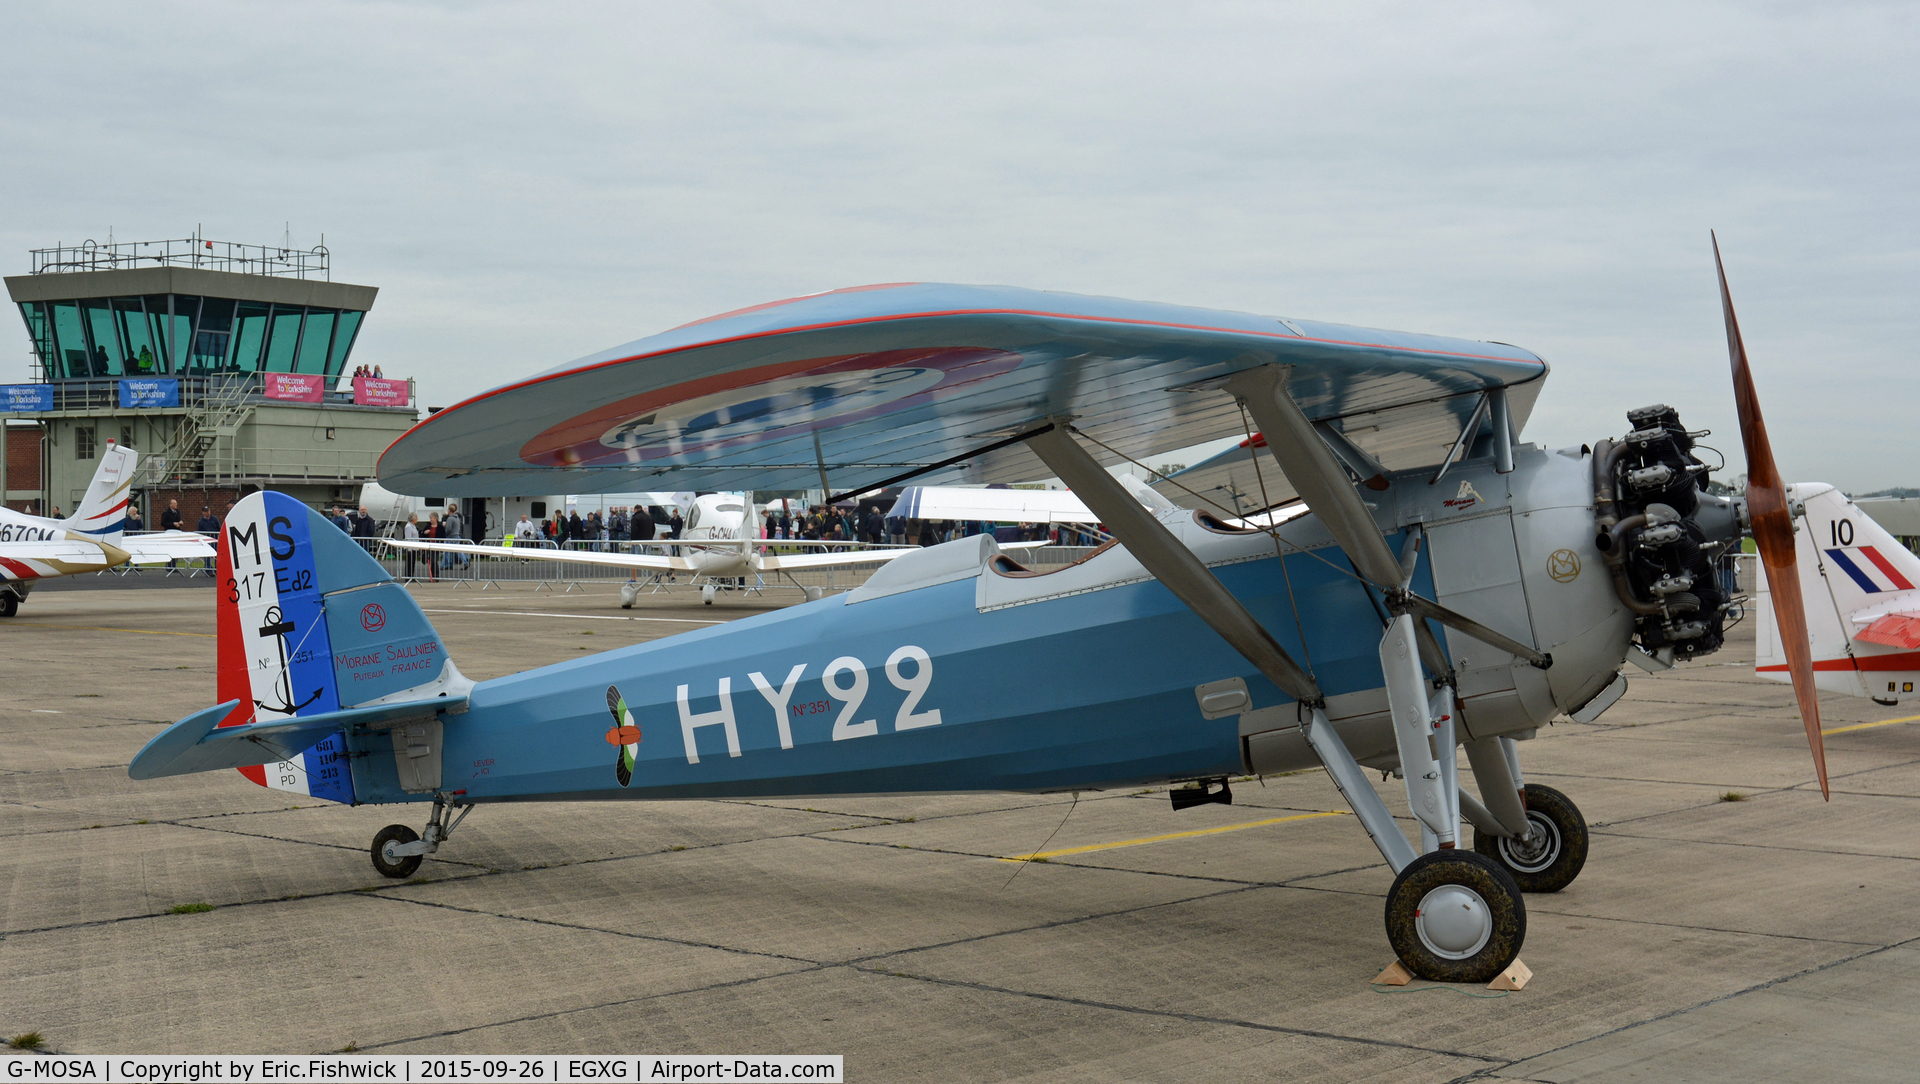 G-MOSA, 1952 Morane-Saulnier MS.317 C/N 351, 2. G-MOSA at The Yorkshire Air Show, Church Fenton, Sept. 2015.